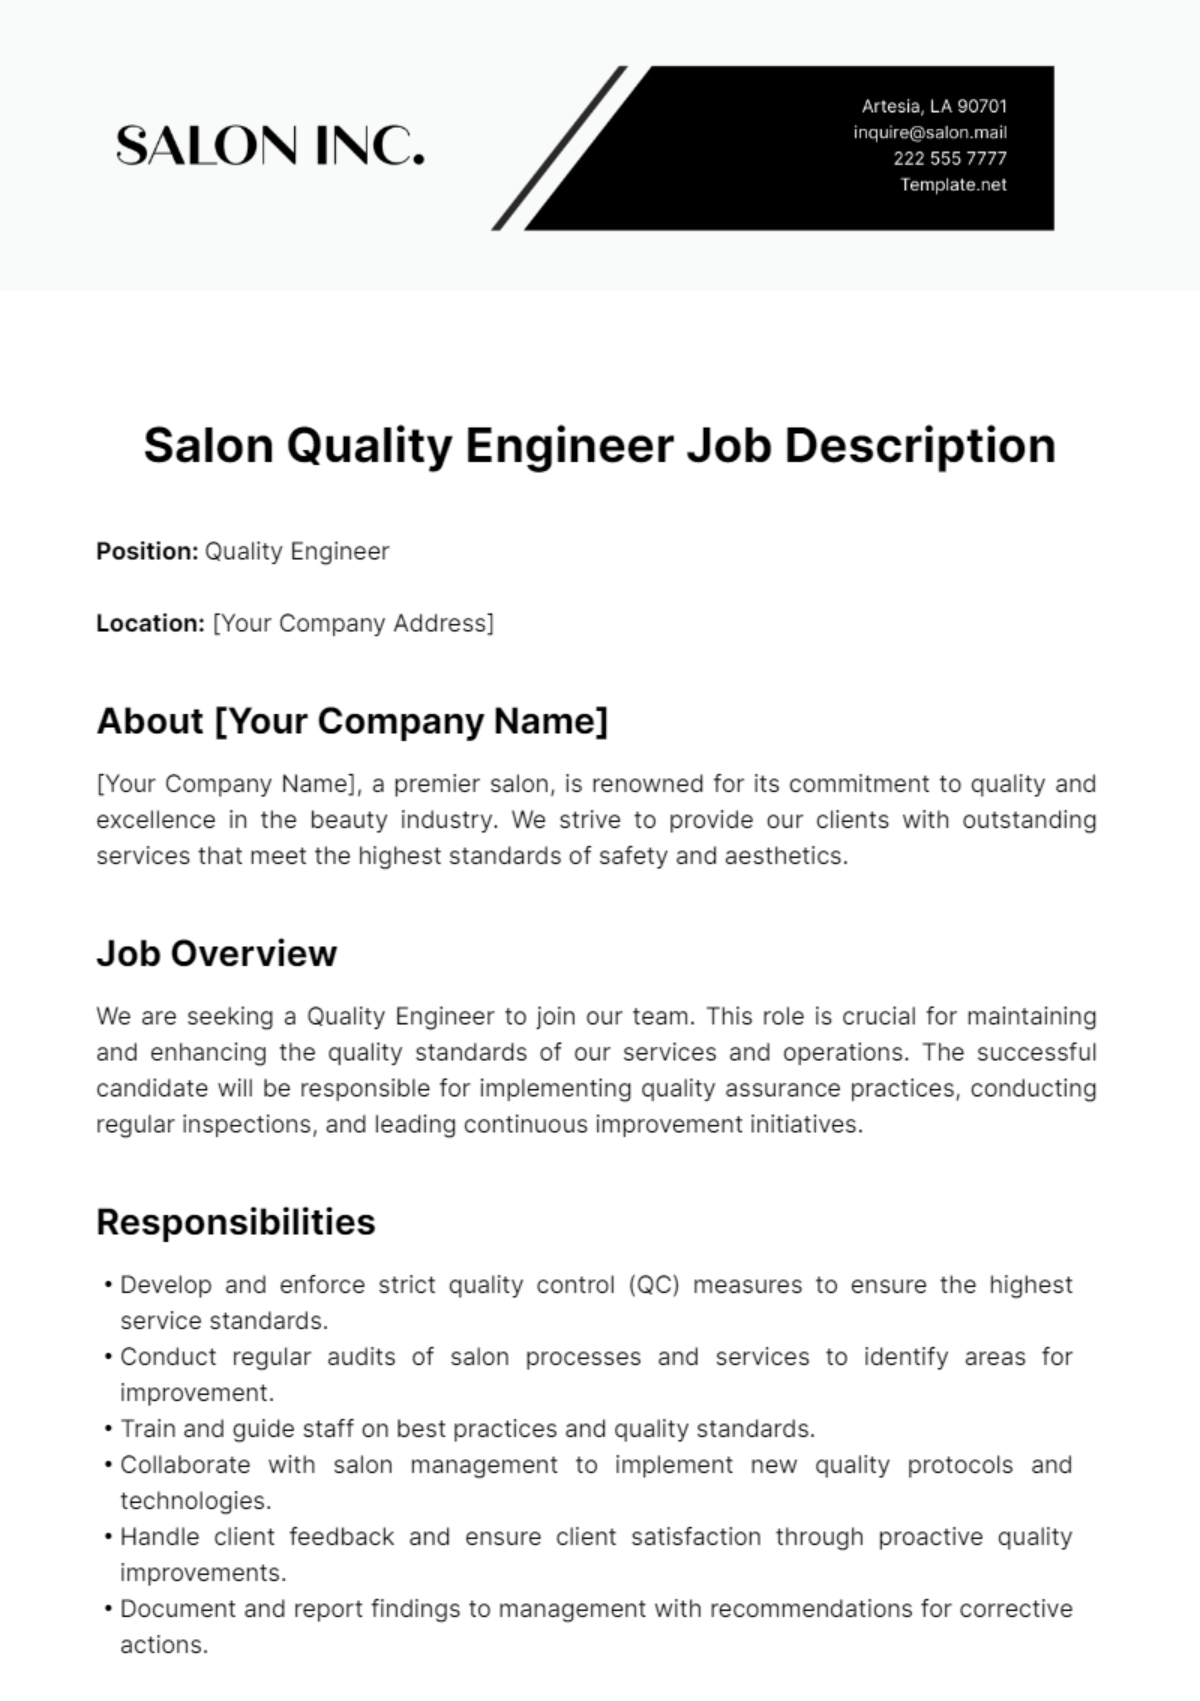 Salon Quality Engineer Job Description Template